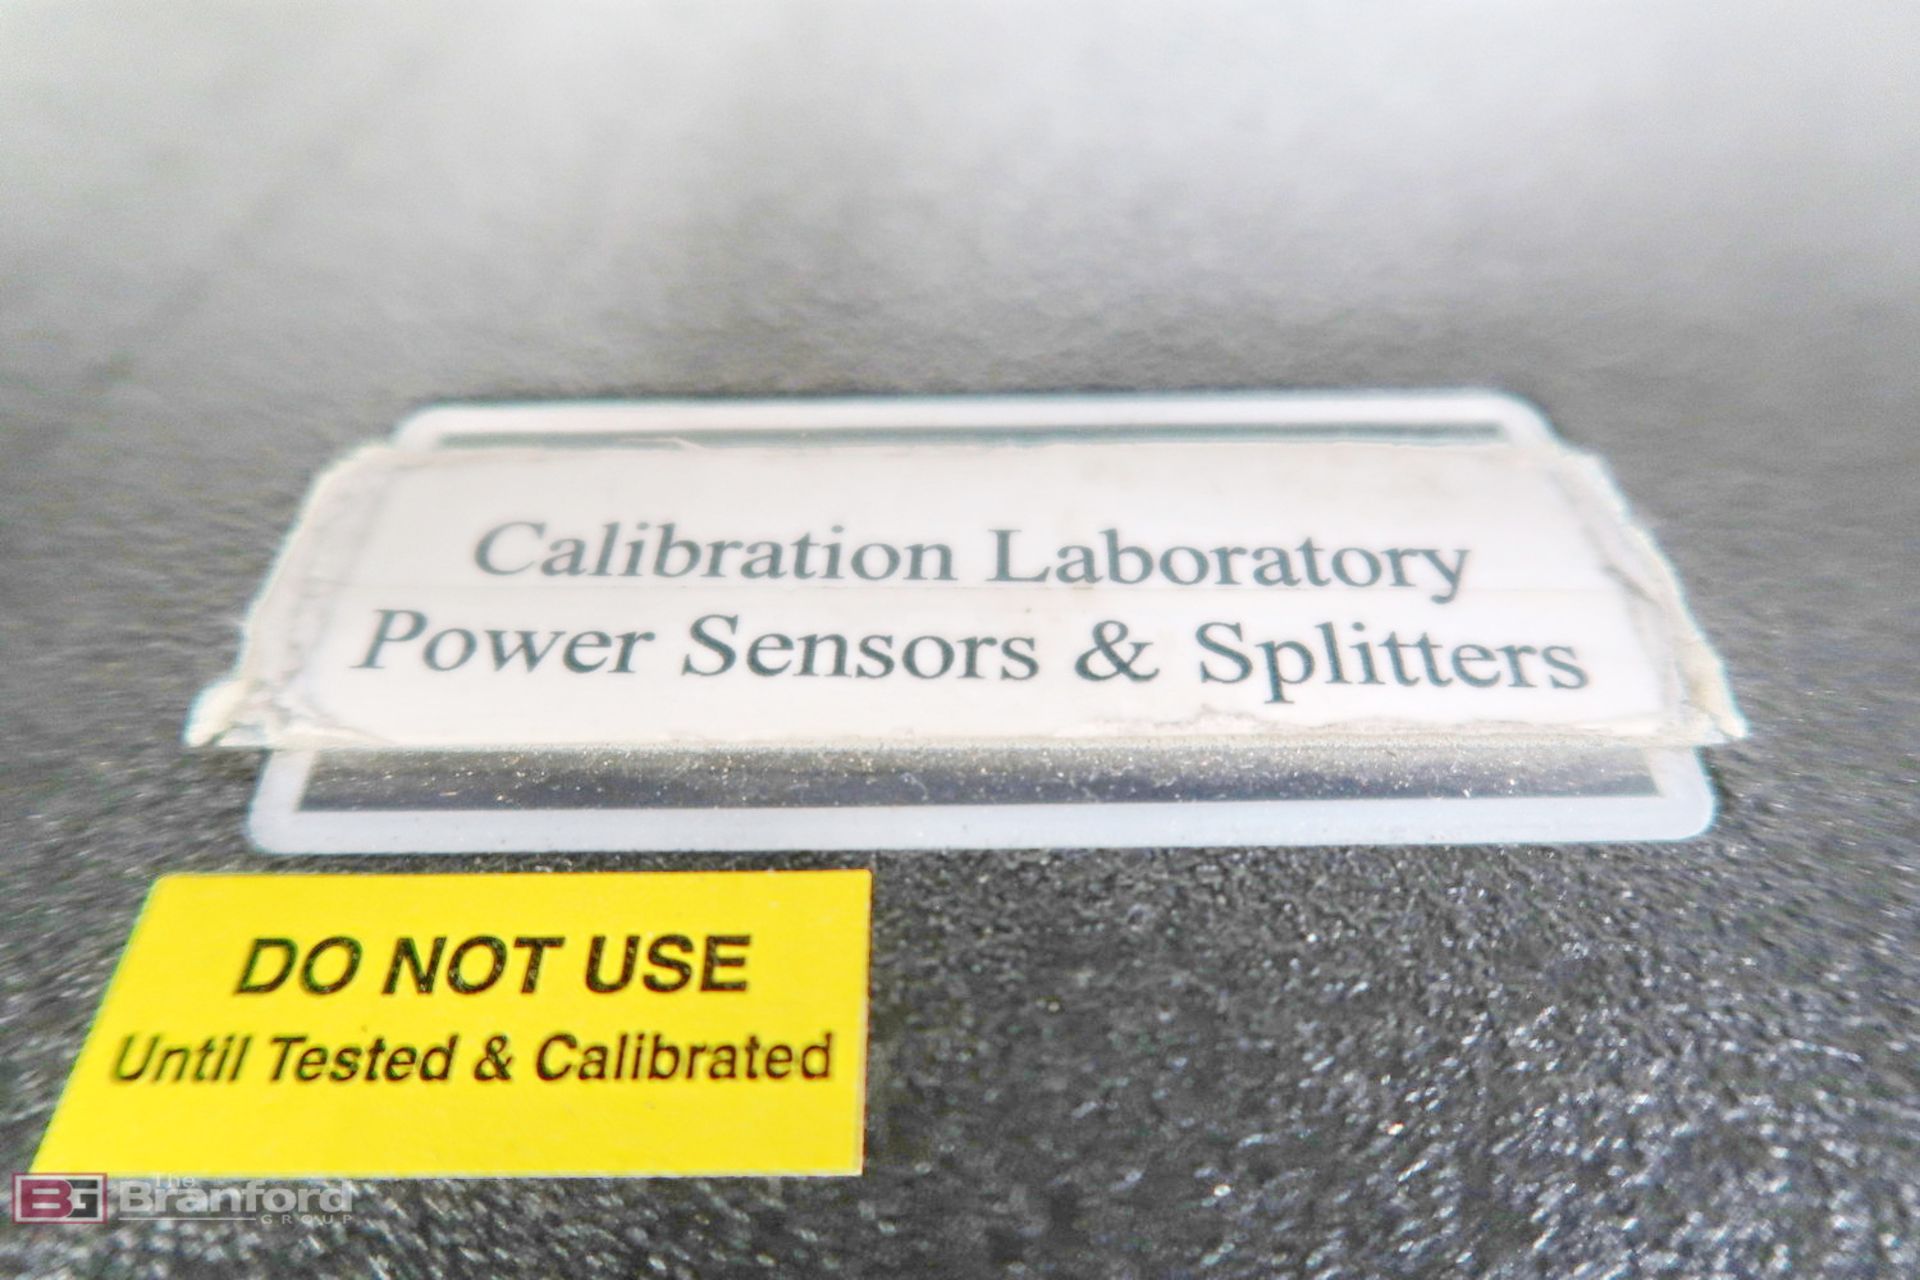 HP calibration laboratory power sensor and splitter set - Image 2 of 3